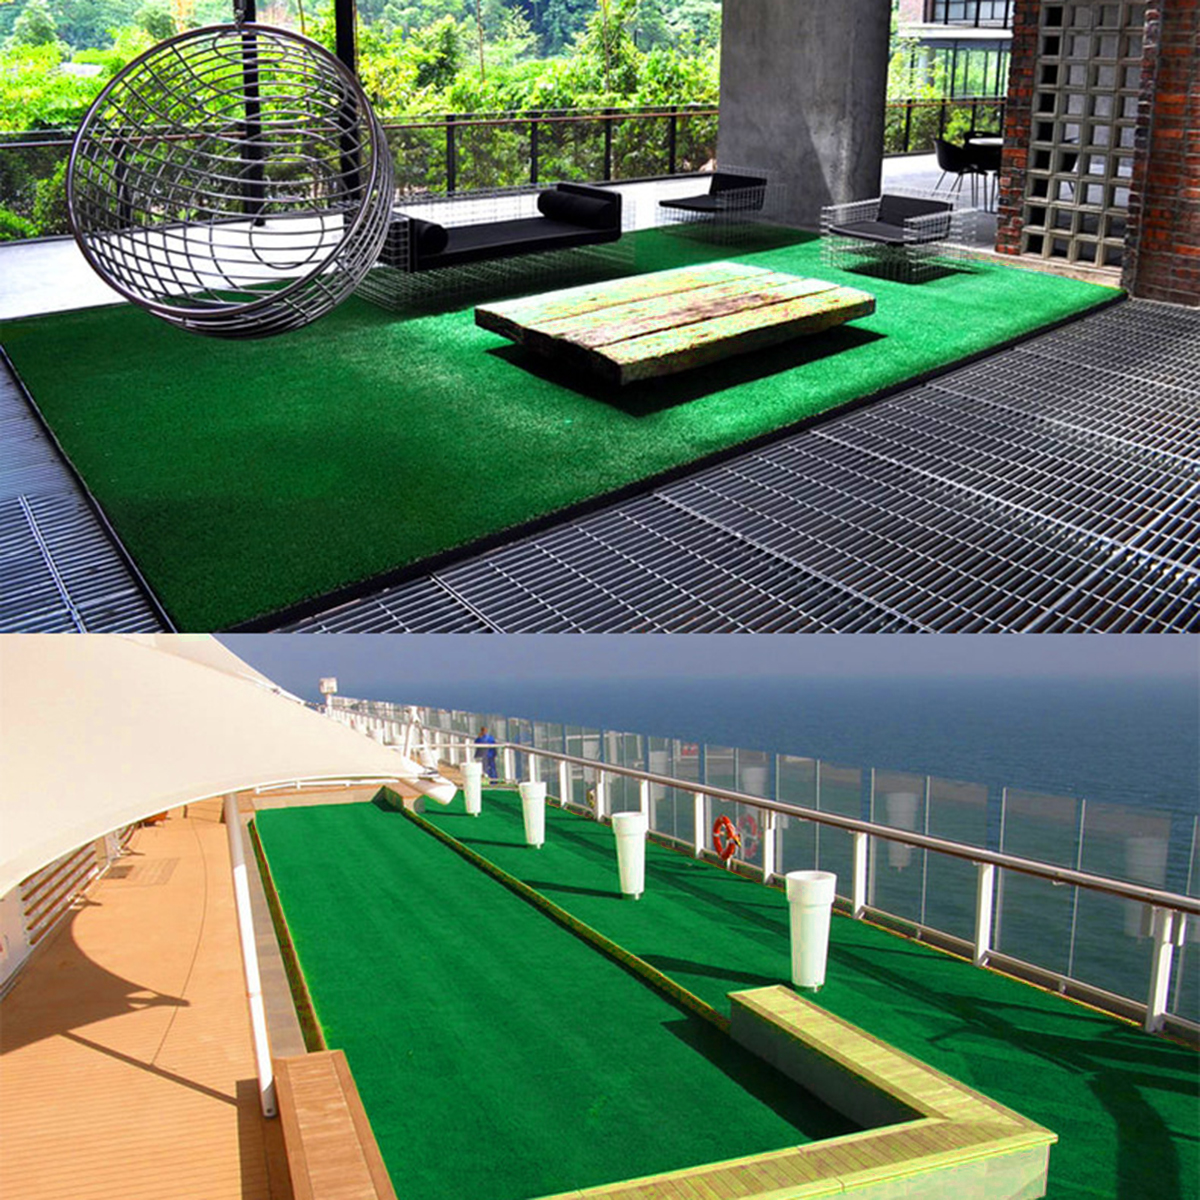 Artificial-Lawn-Turf-Grass-Artificial-Lawn-Carpet-Simulation-Outdoor-Green-Lawn-for-Garden-Patio-Lan-1789361-9